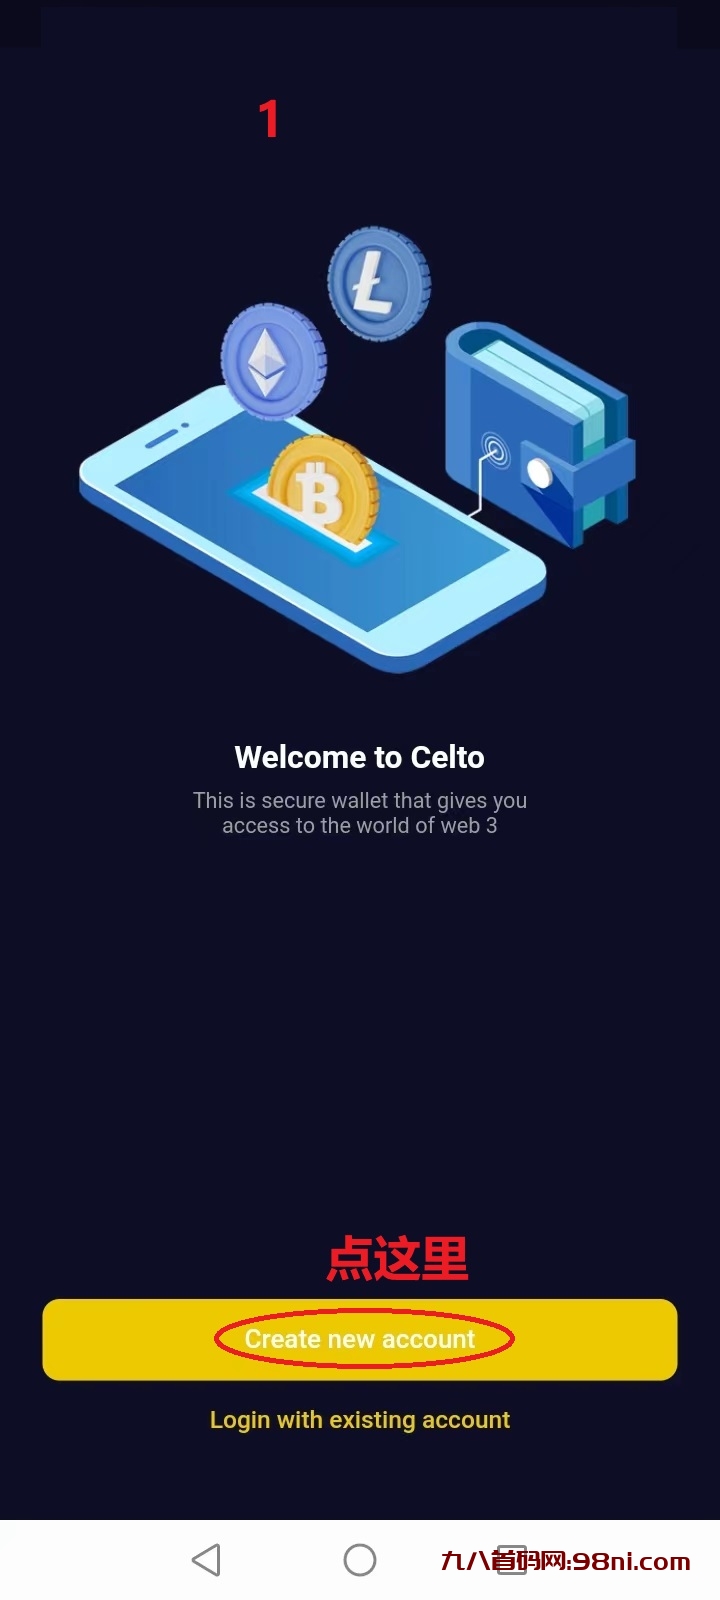 Celto（塞尔托），刚出，无广告，高产期，注册简单过程-首码网-网上创业赚钱首码项目发布推广平台